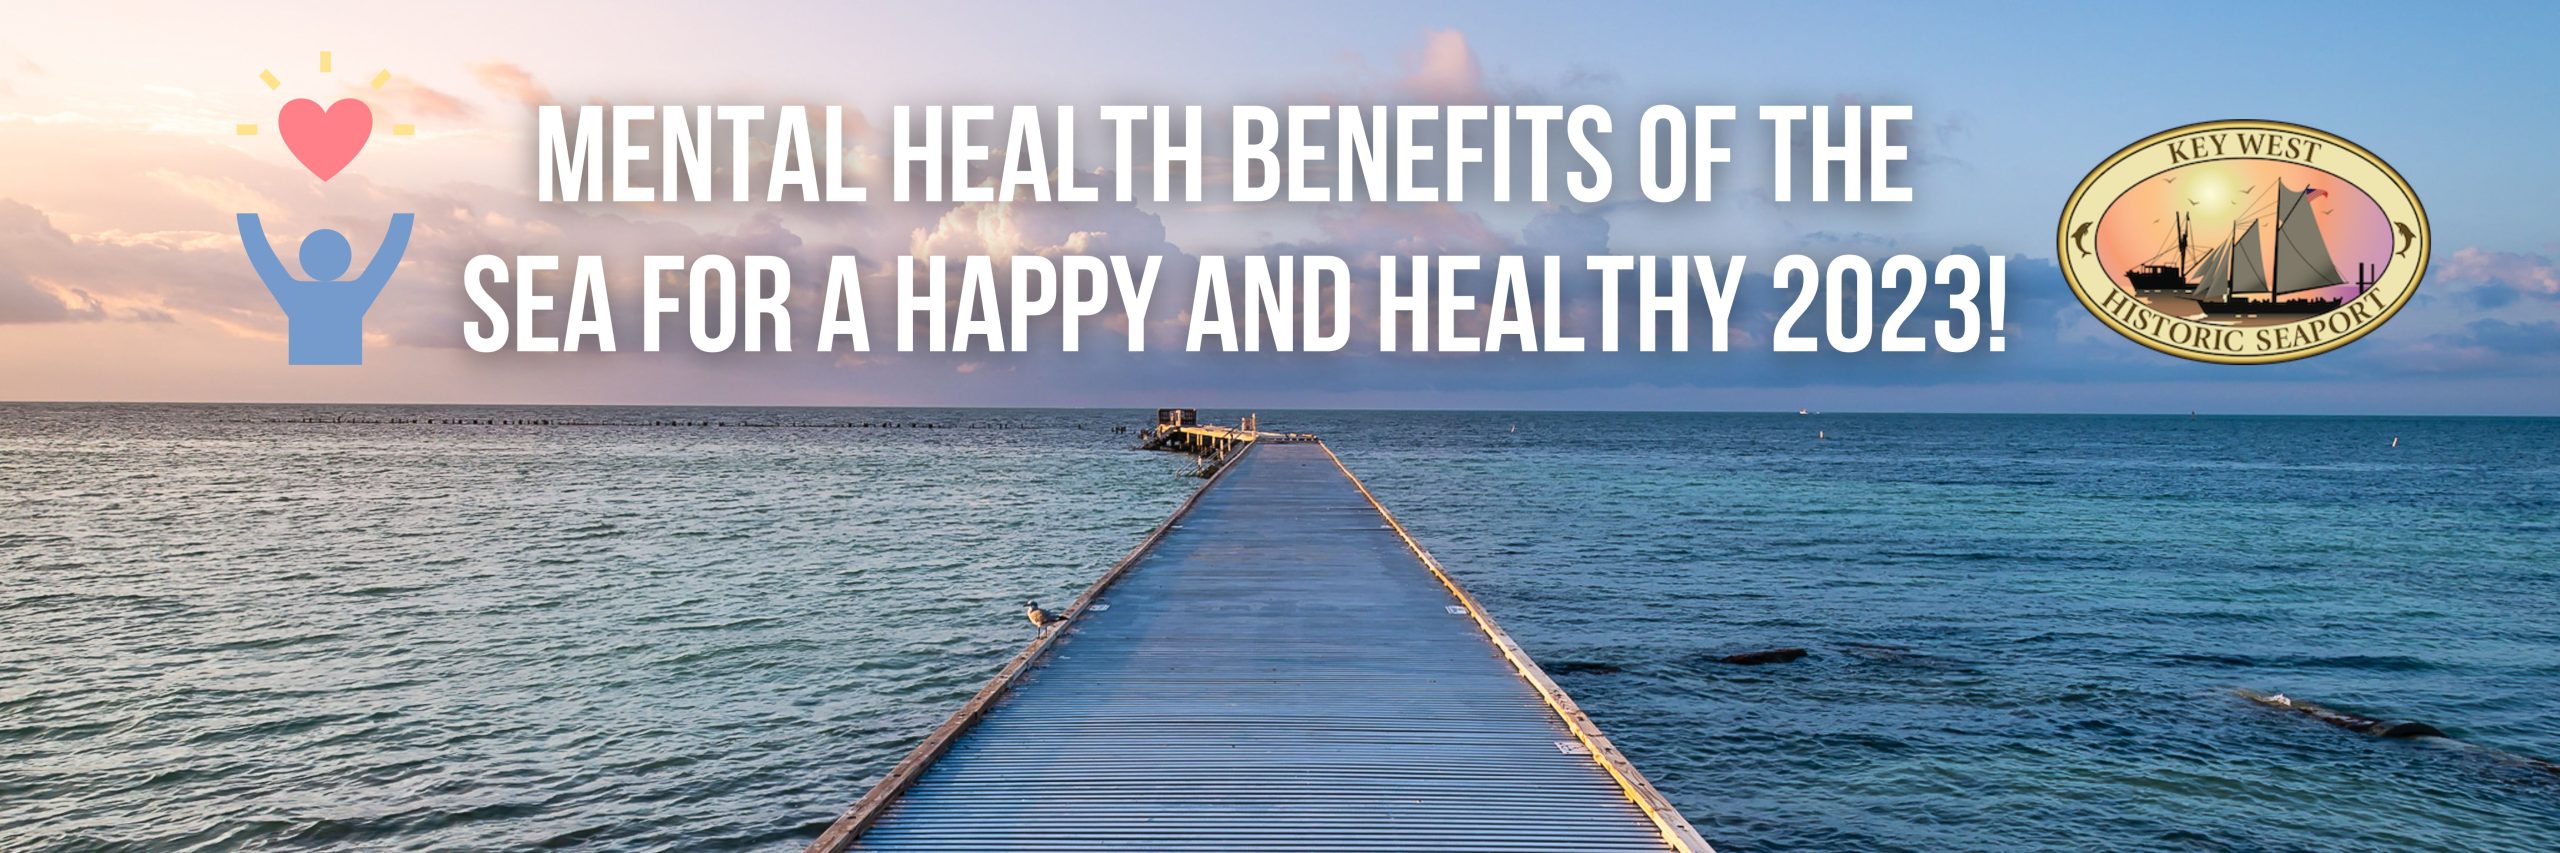 mental health benefits of the sea for a happy healthy 2023 key west bight marina